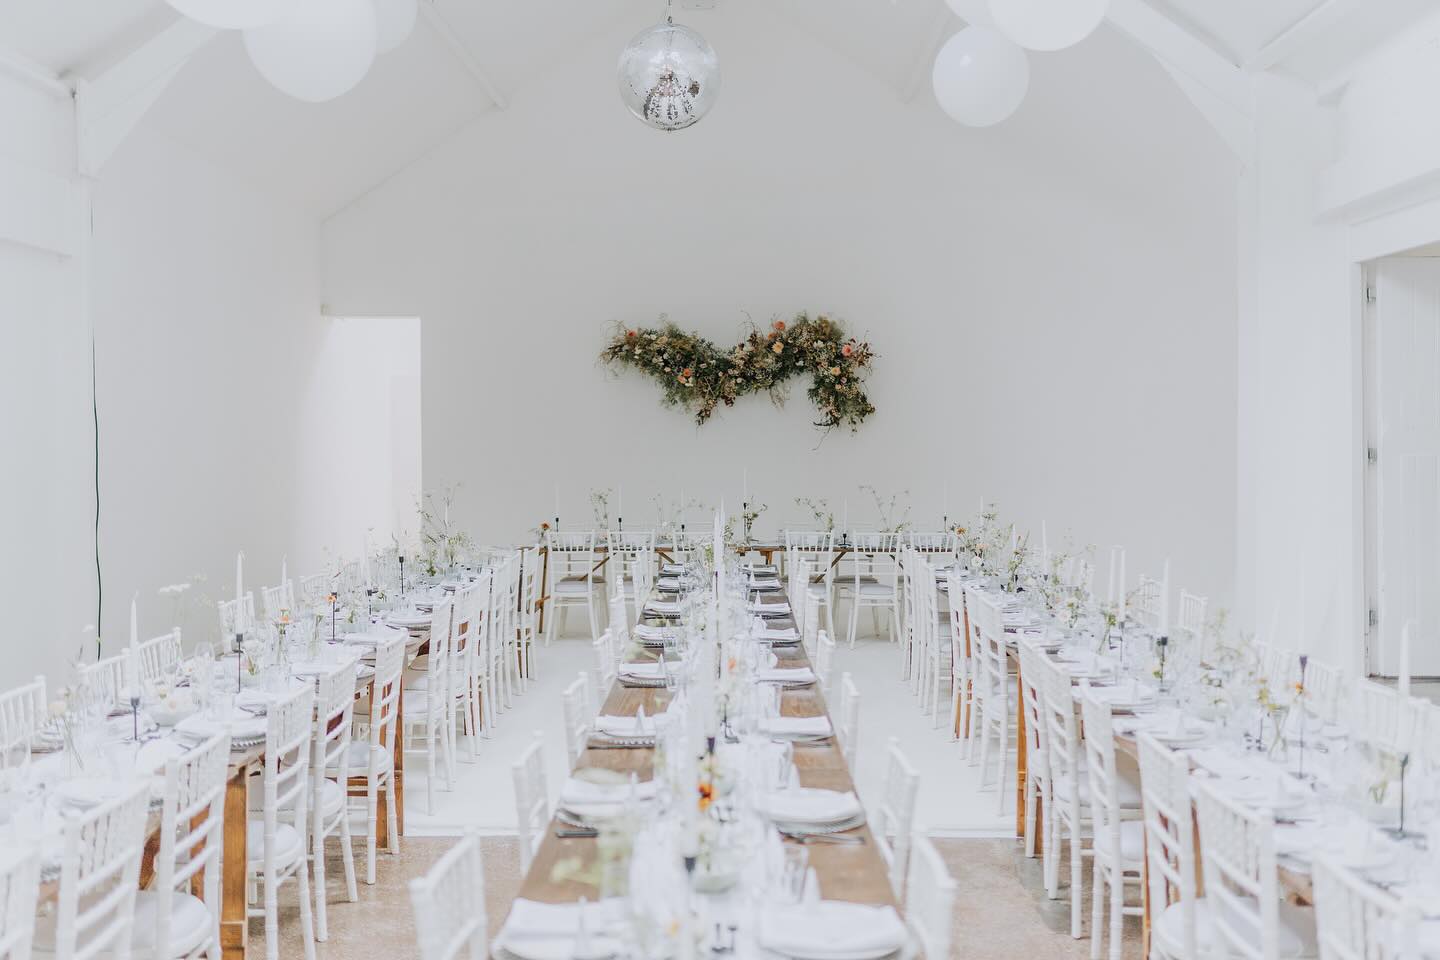 Monochrome table dressings & delicate wild flowers contrast against our crisp white venue for Hollie & David ????

???? : @claracooperphoto 
???? : @smokebushfloral 
???? : @floveevents 
???? : @thewhitecloset 
???? : @fivefourstudios